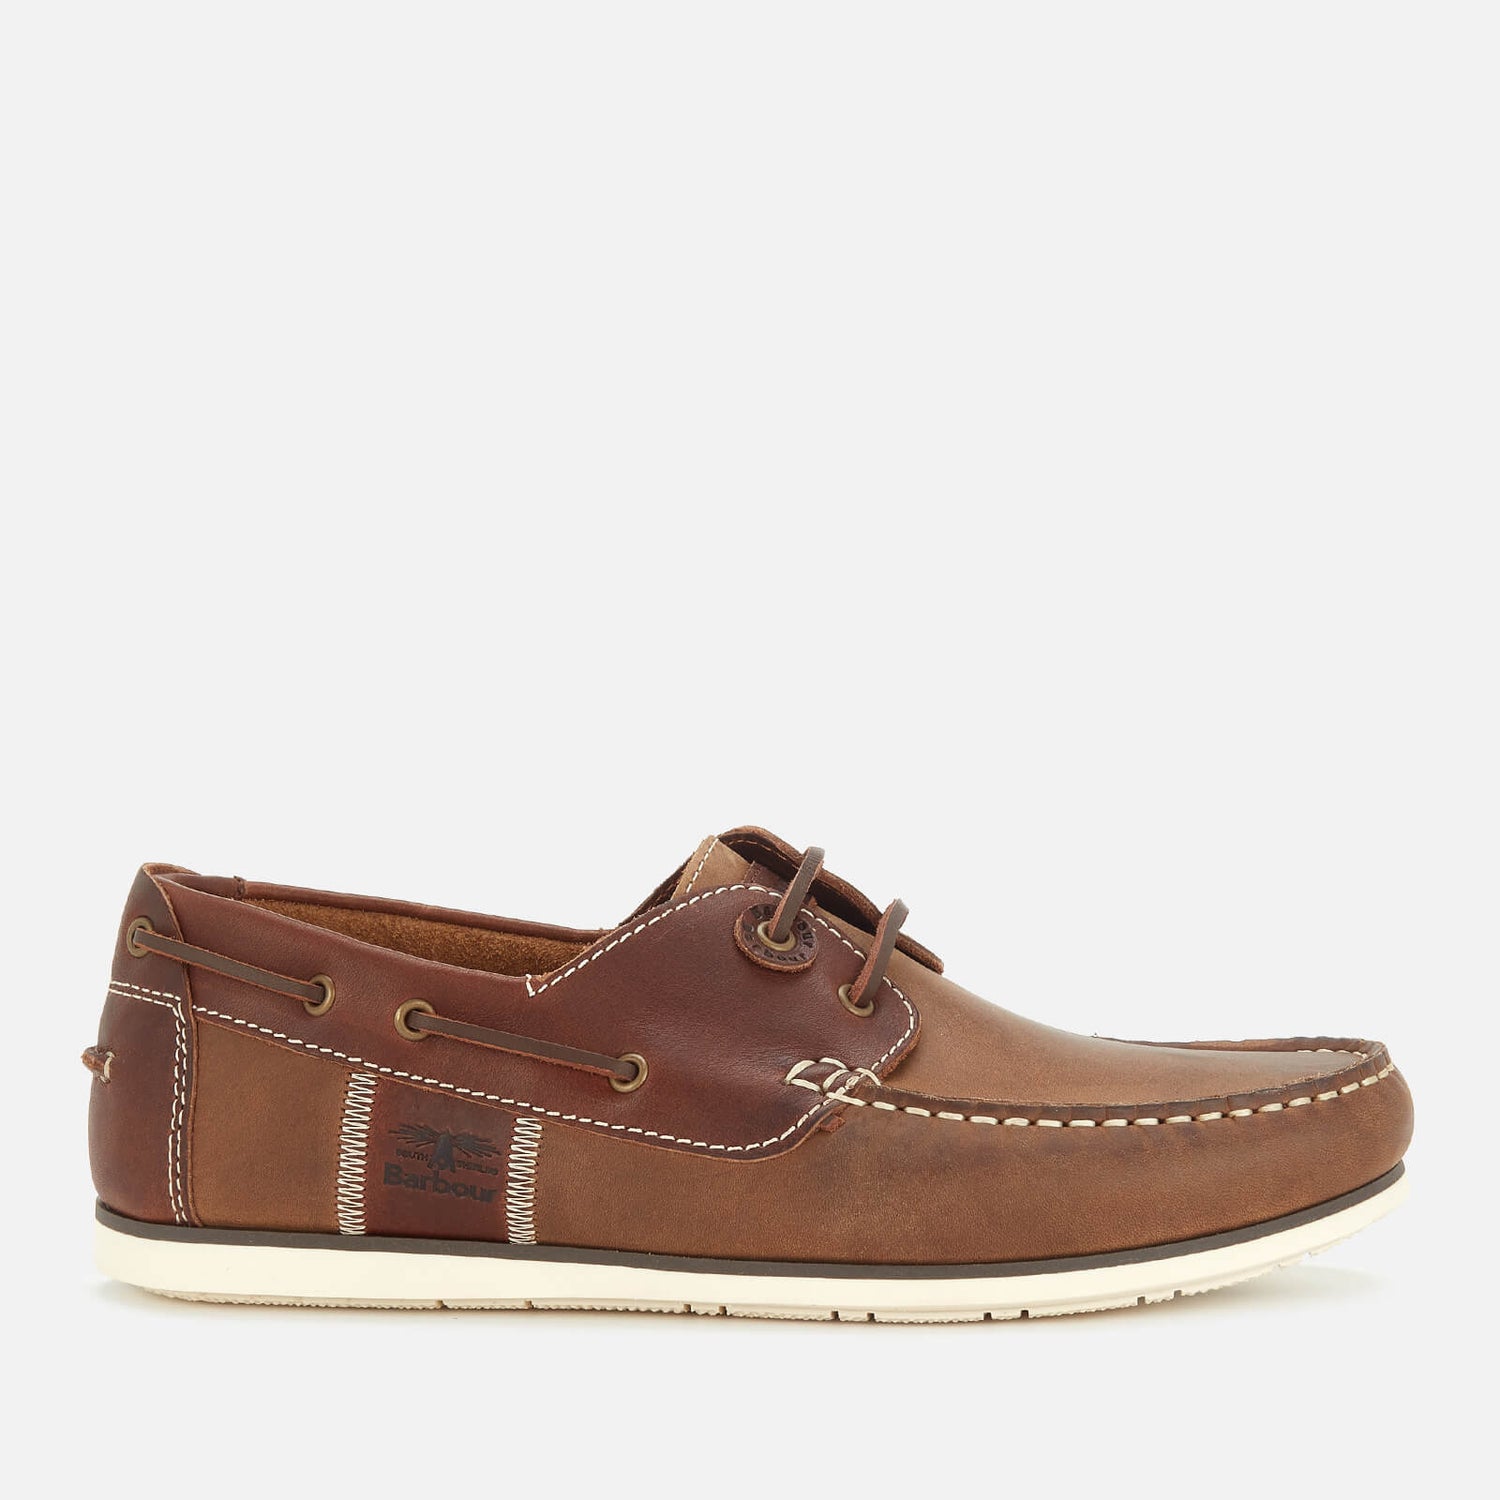 Barbour Men's Capstan Leather Boat Shoes - Beige/Brown